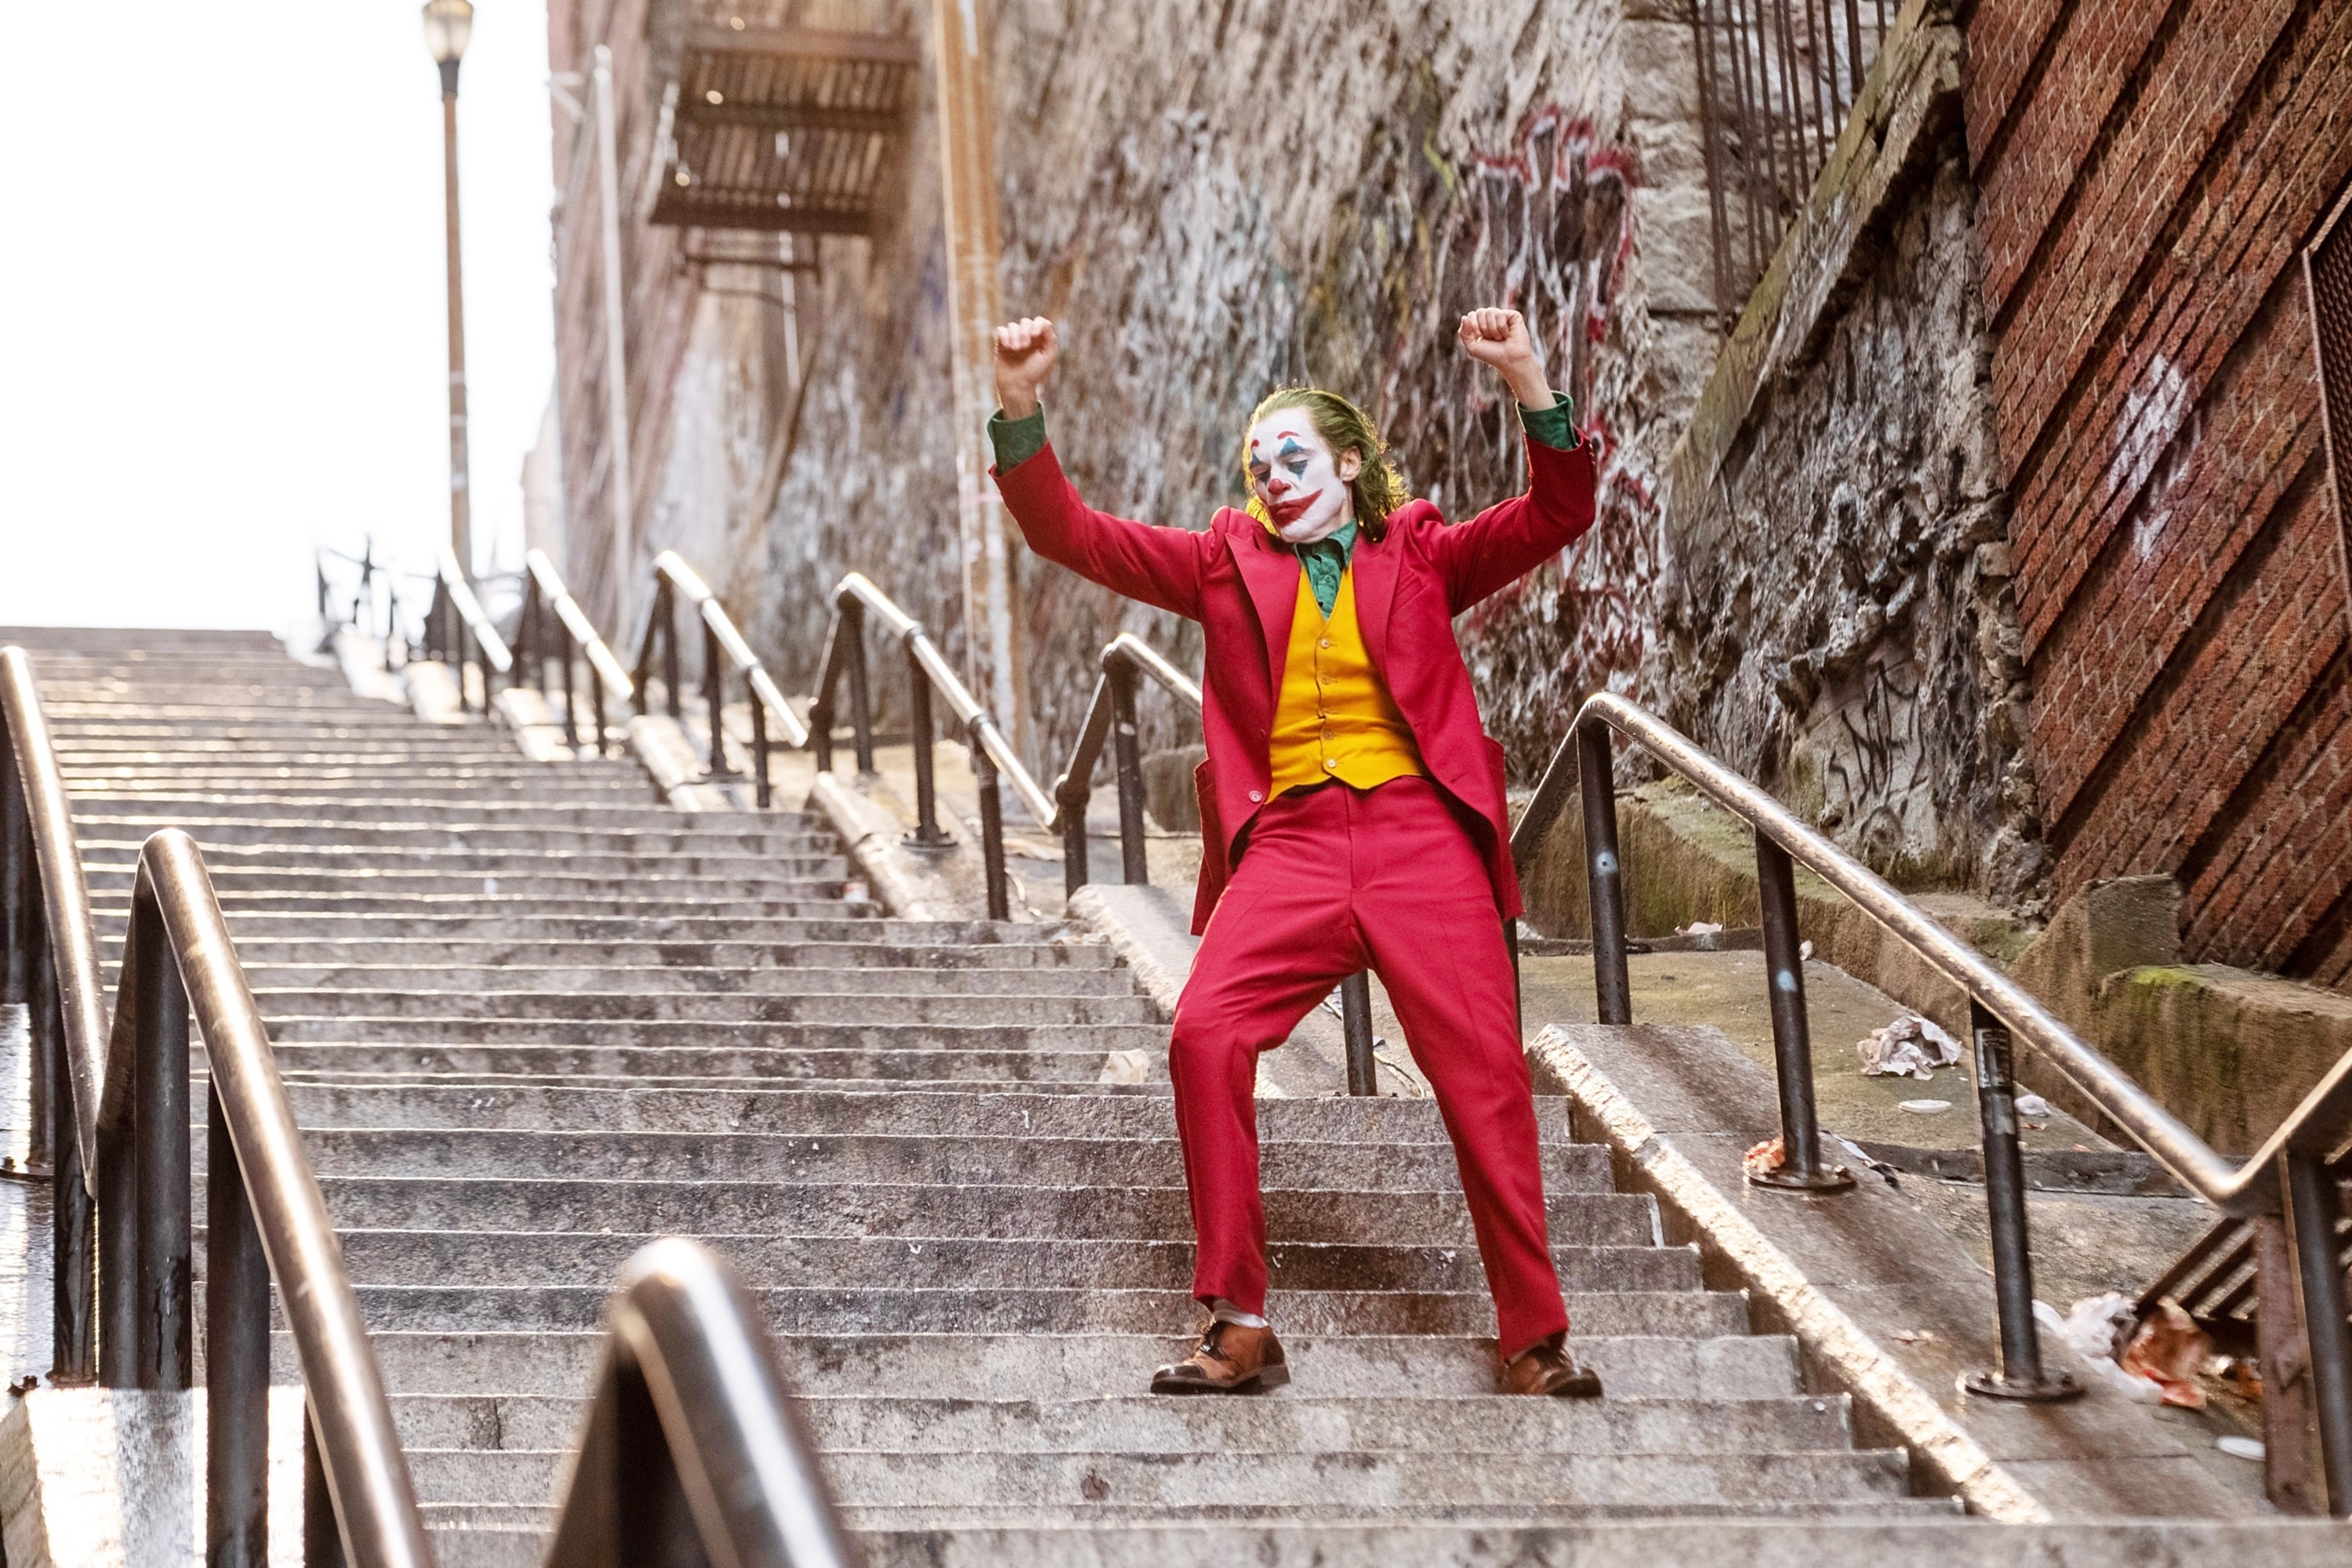 Joaquin Phoenix dressed as the Joker dancing on steps